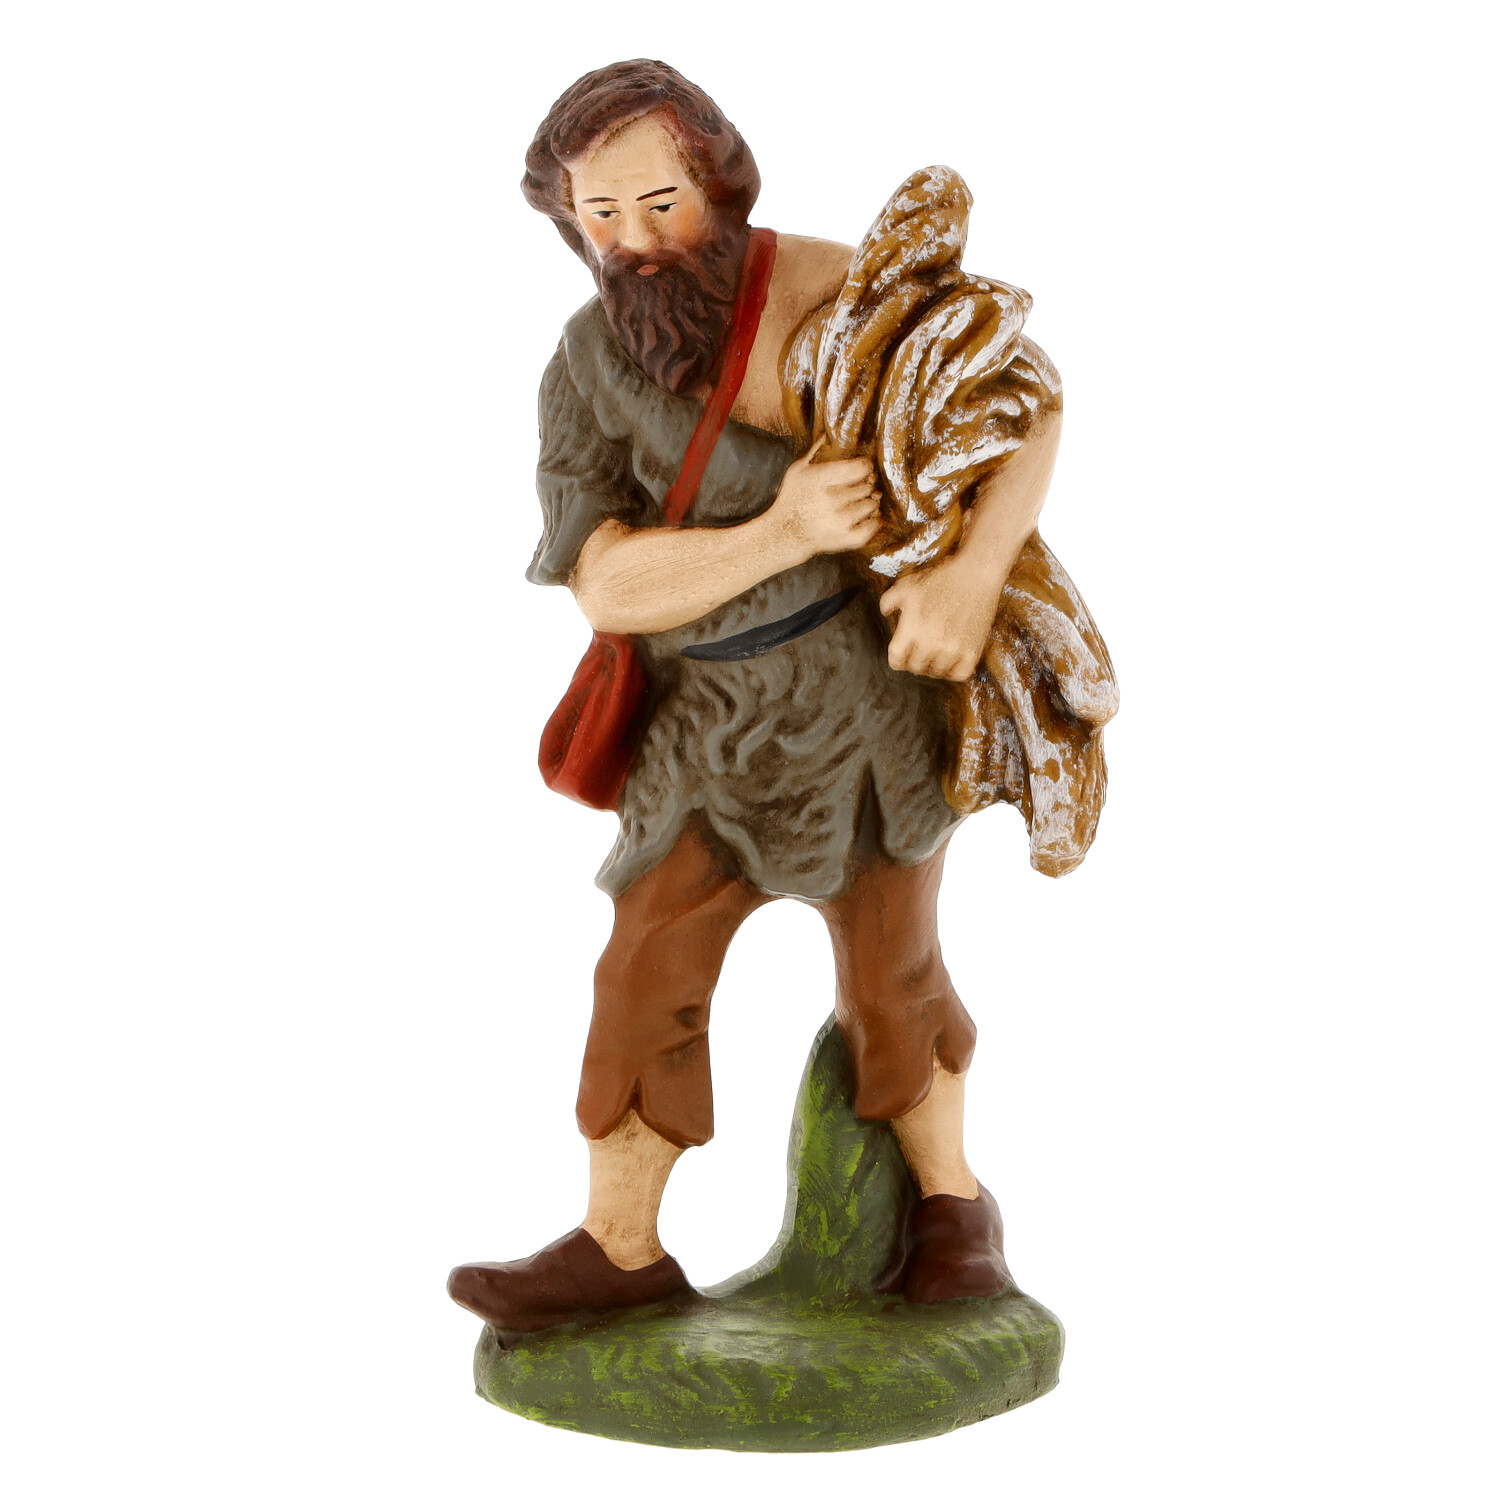 Shepherd with straw - Marolin Nativity figure - made in Germany